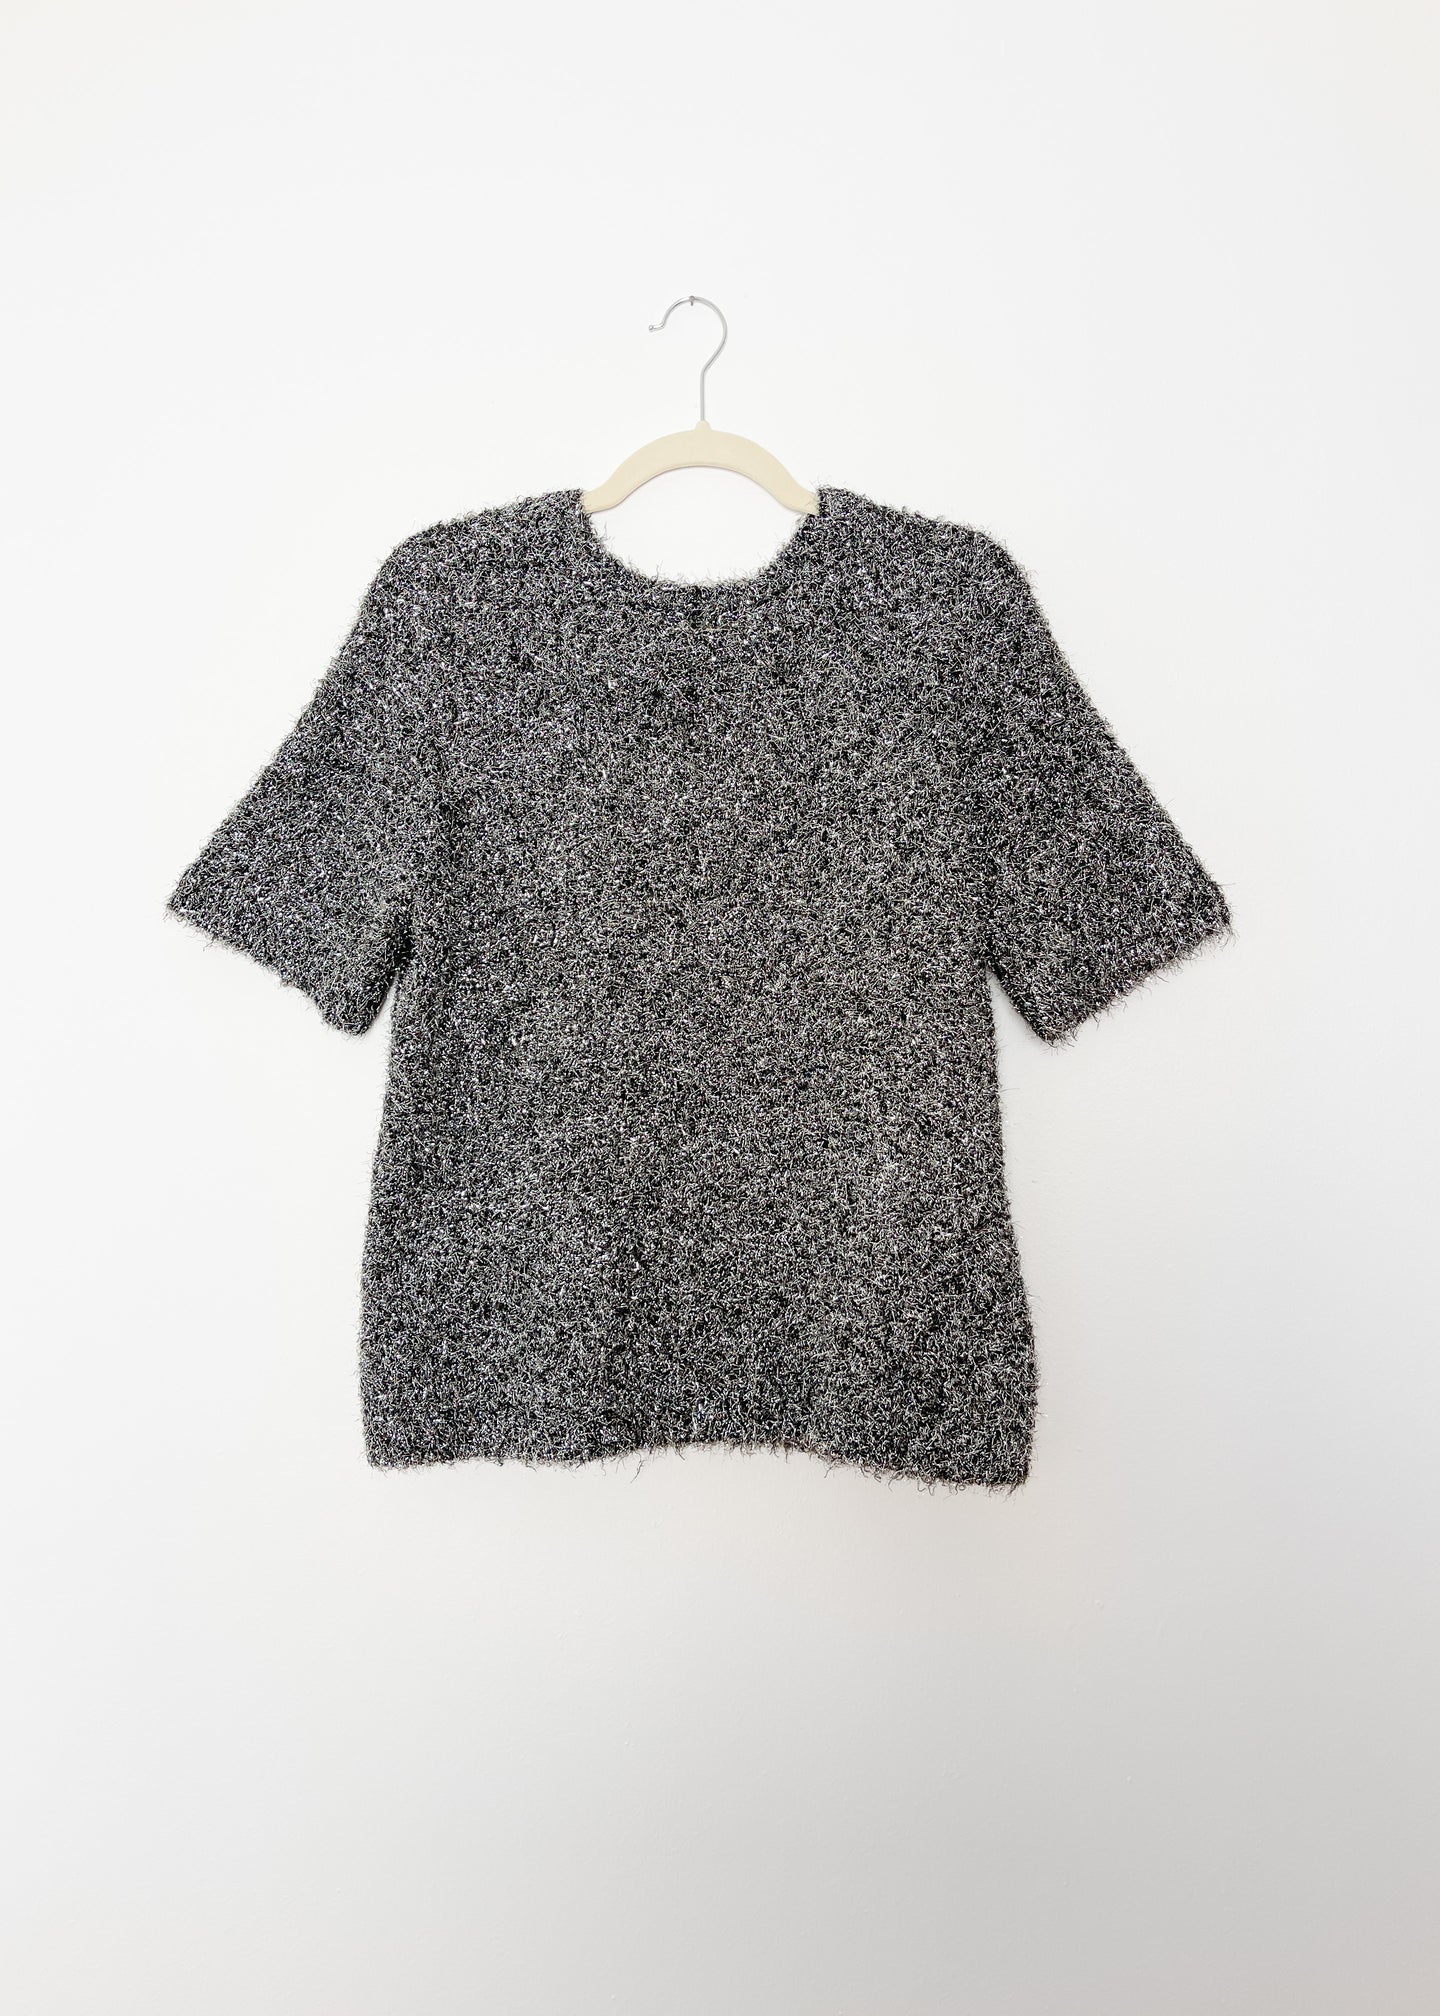 Vintage Metallic Knit Sweater Top | XS - L